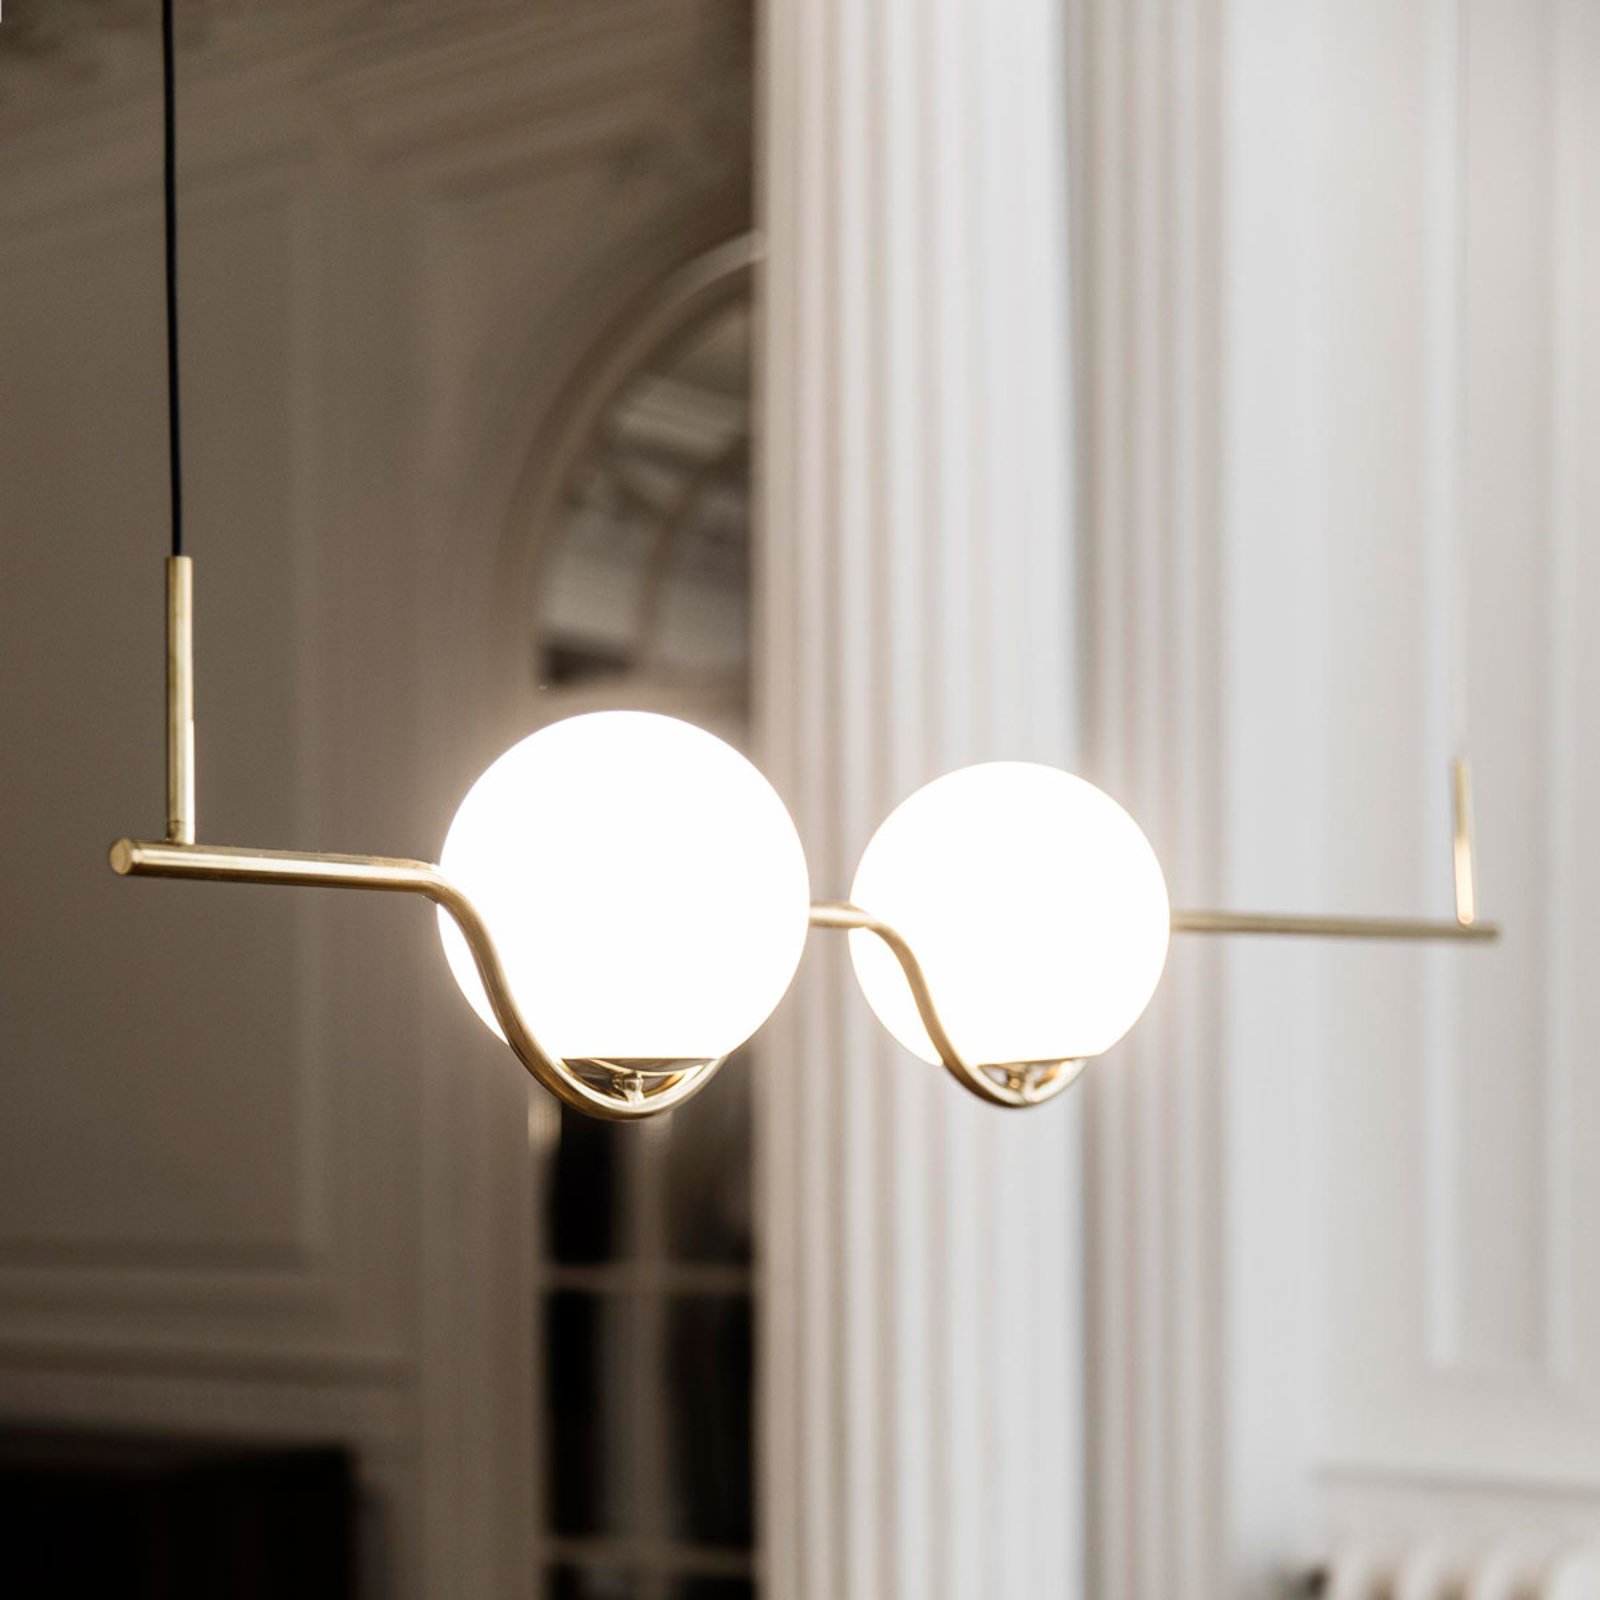 Design-hanglamp Vita, LED Lampen24.nl